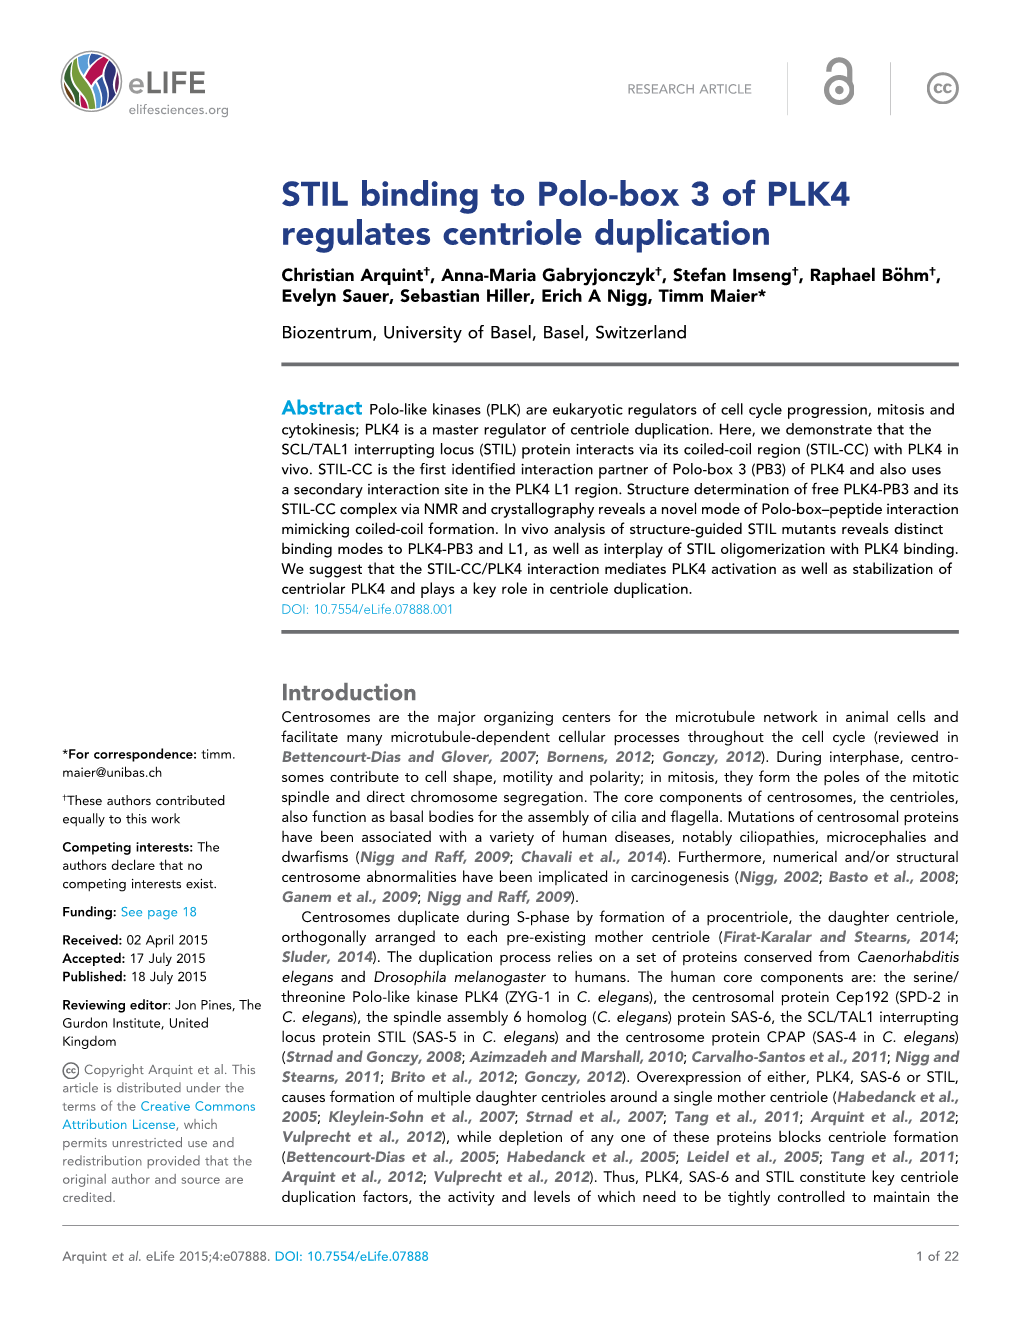 STIL Binding to Polo-Box 3 of PLK4 Regulates Centriole Duplication